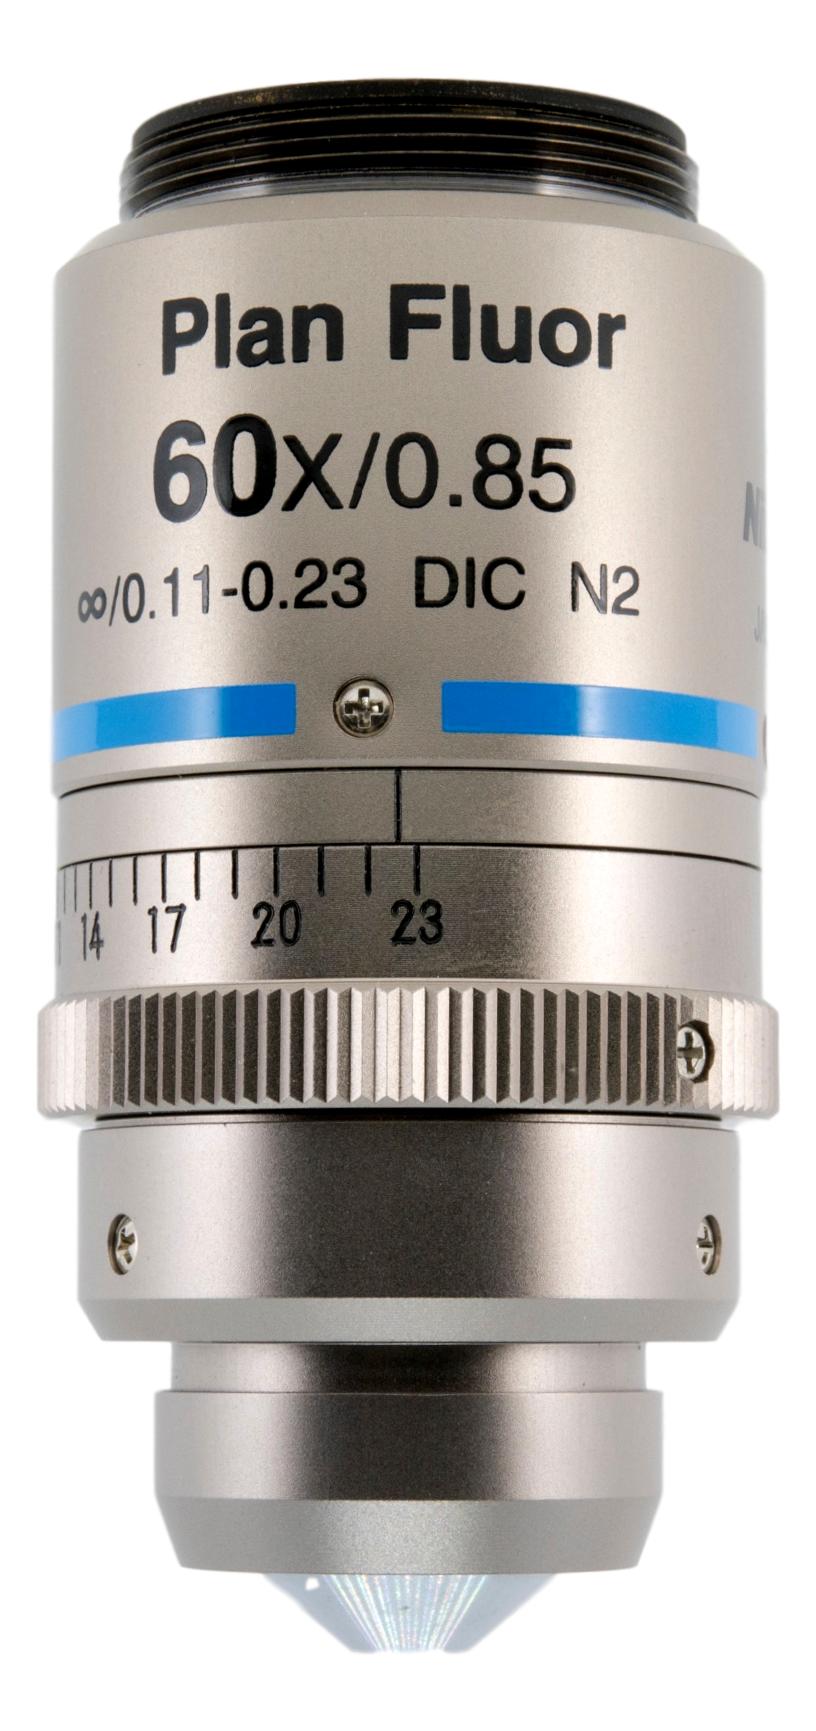 Nikon 60x Plan Fluor Correction-Collar DIC Infinity Corrected Objective